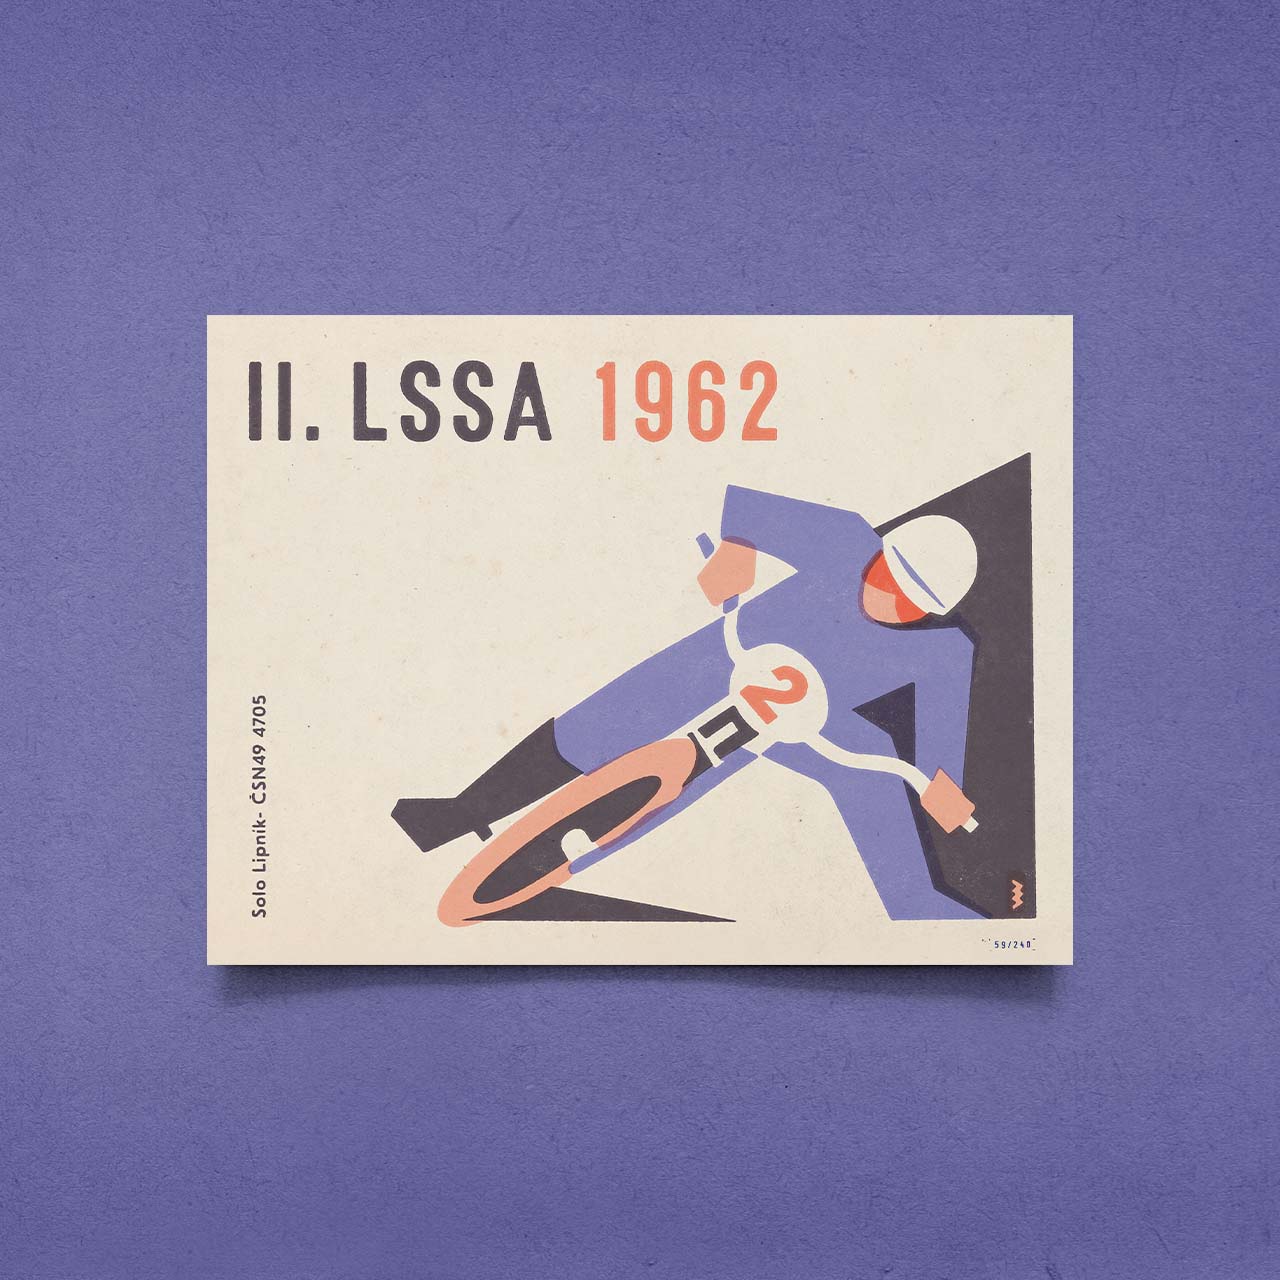 Limitovaný plakát 40x30 cm / II. LSSA 1962 - Plochá dráha